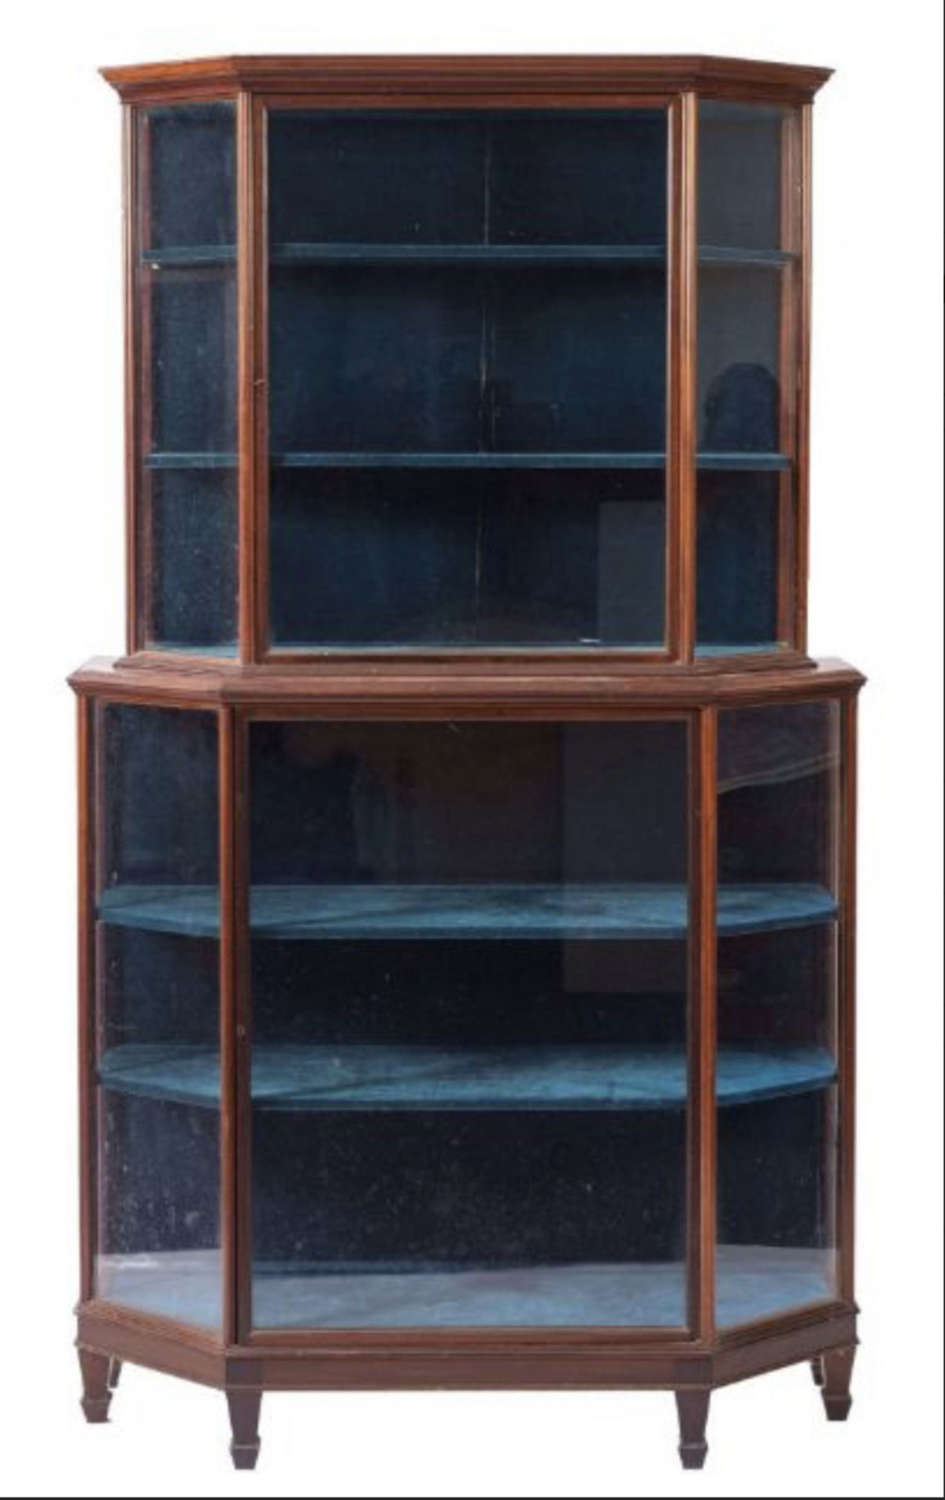 A Victorian mahogany and glazed display cabinet